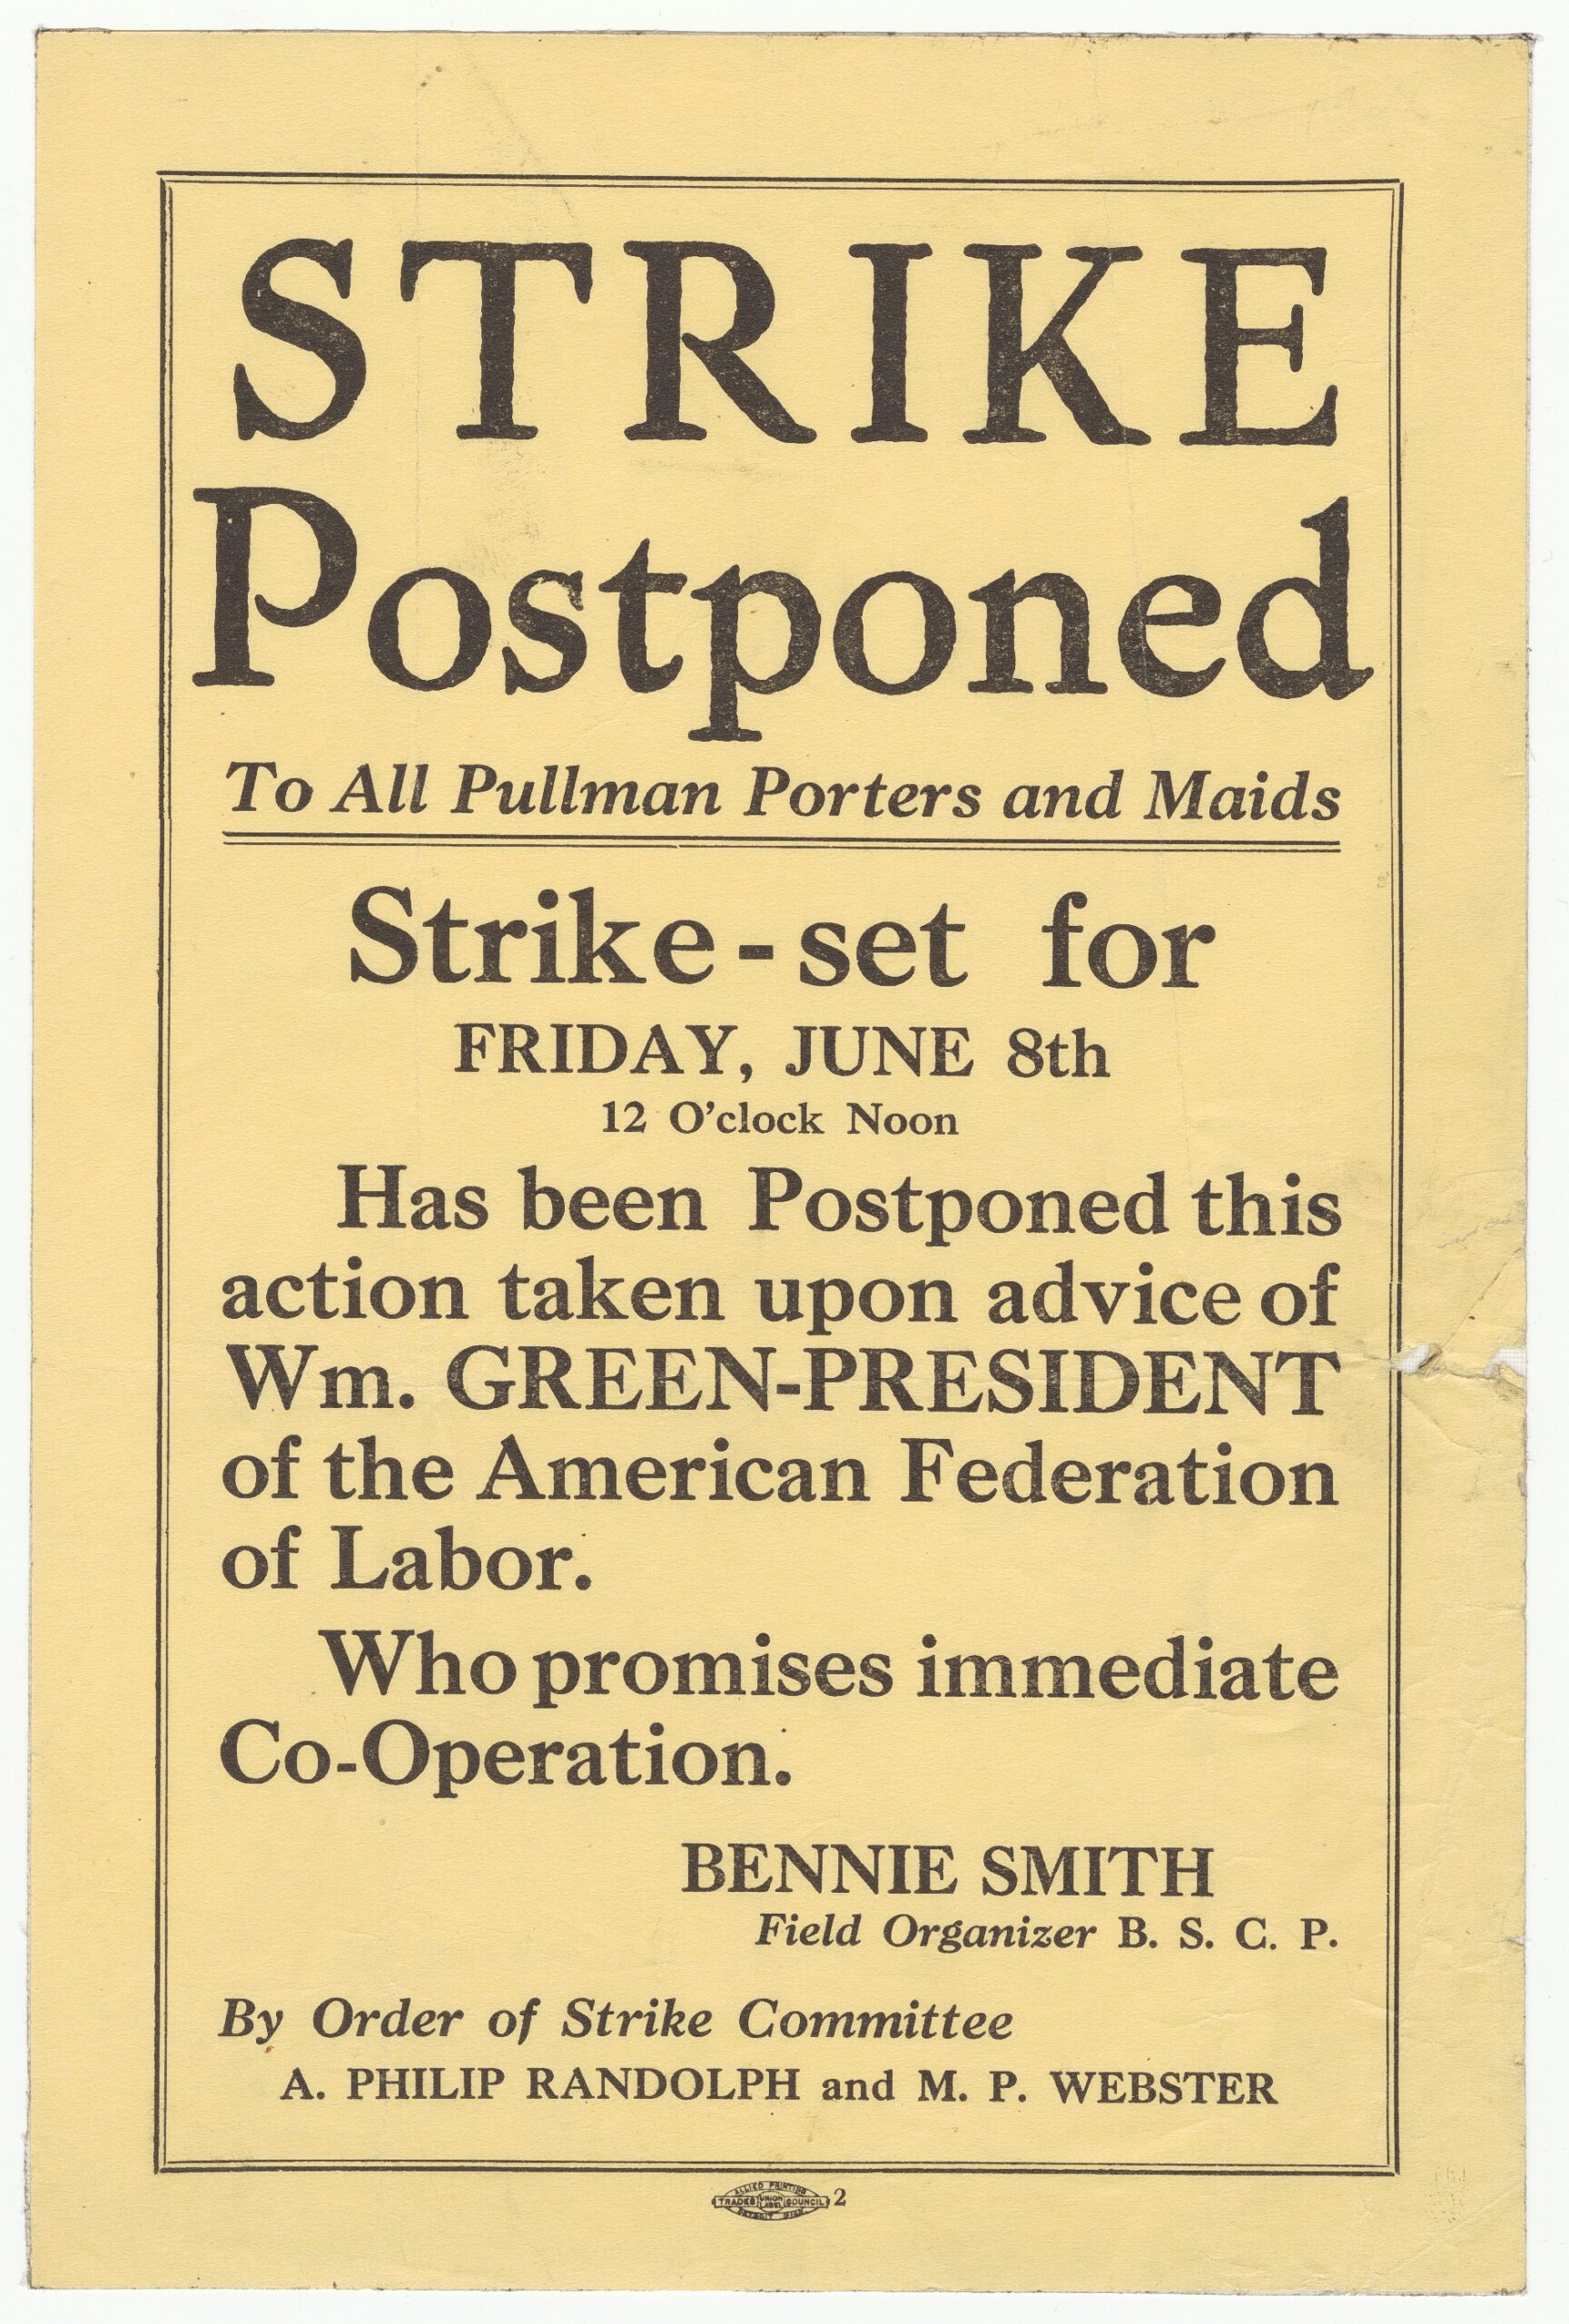 Broadside announcing the postponement of a Pullman porter strike.